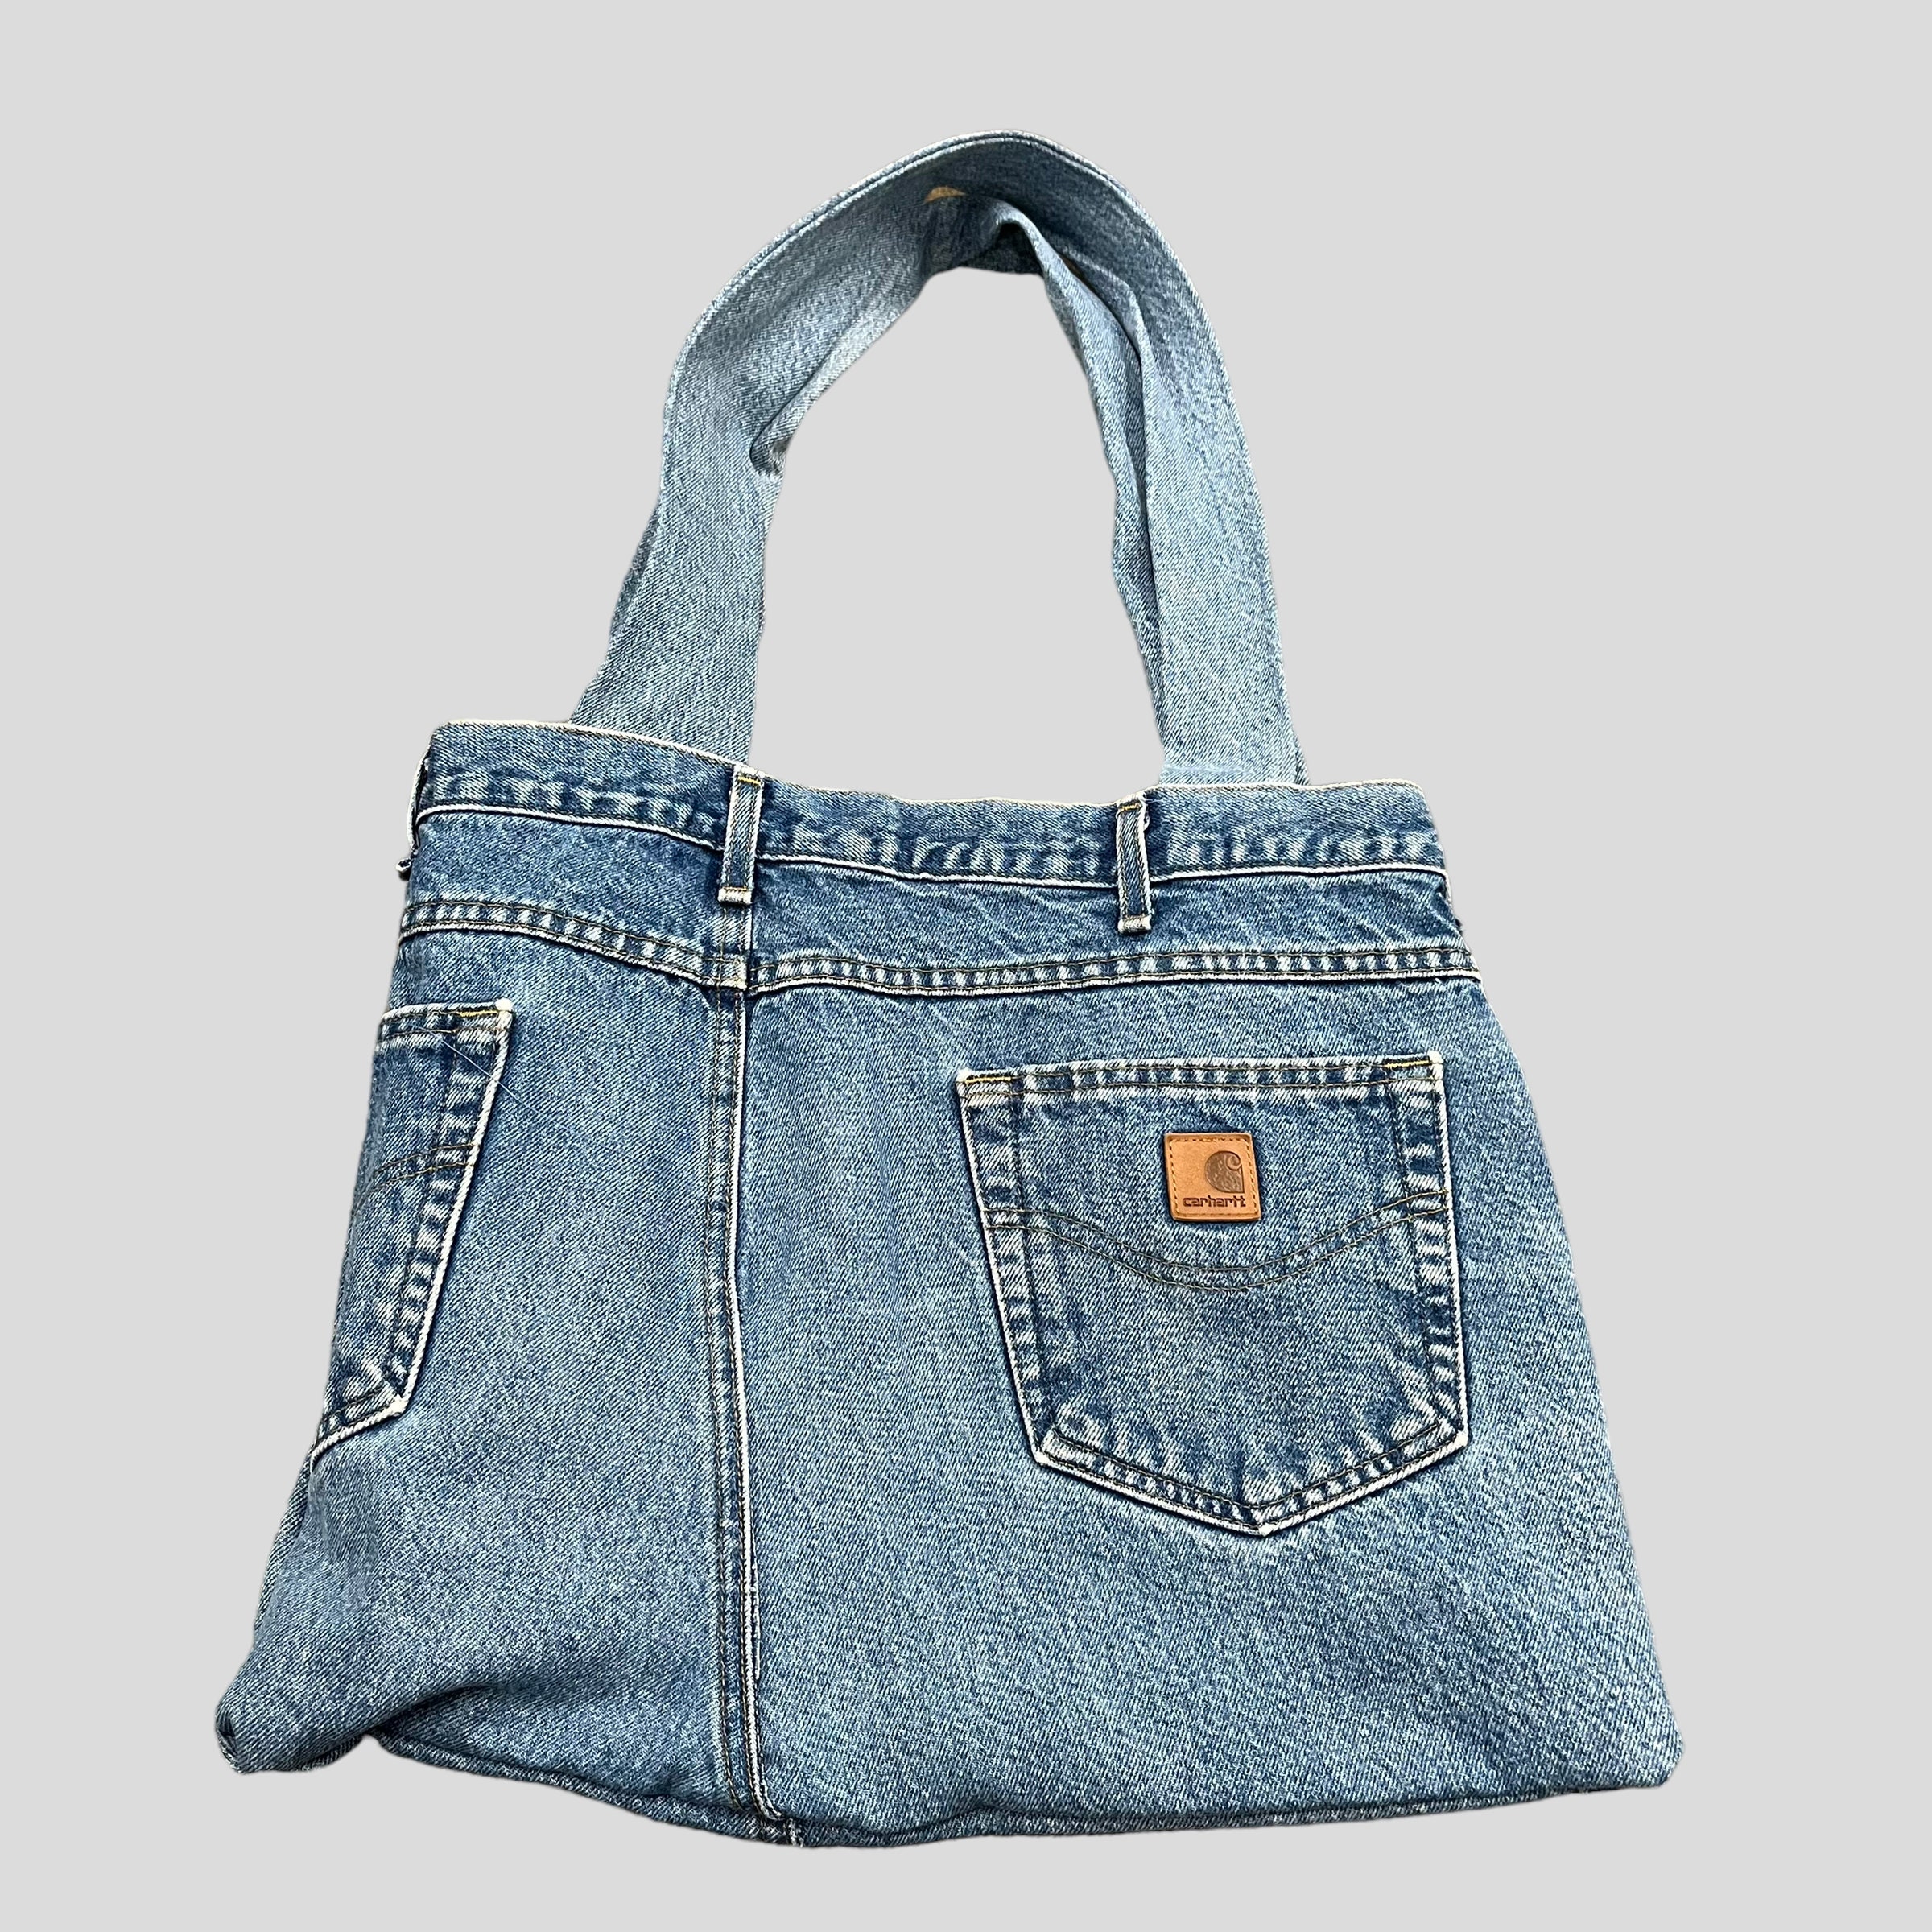 Carhartt Womens Handbag Camo Purse New With Tags Tote Bag With Pockets  Shoulder Bag 